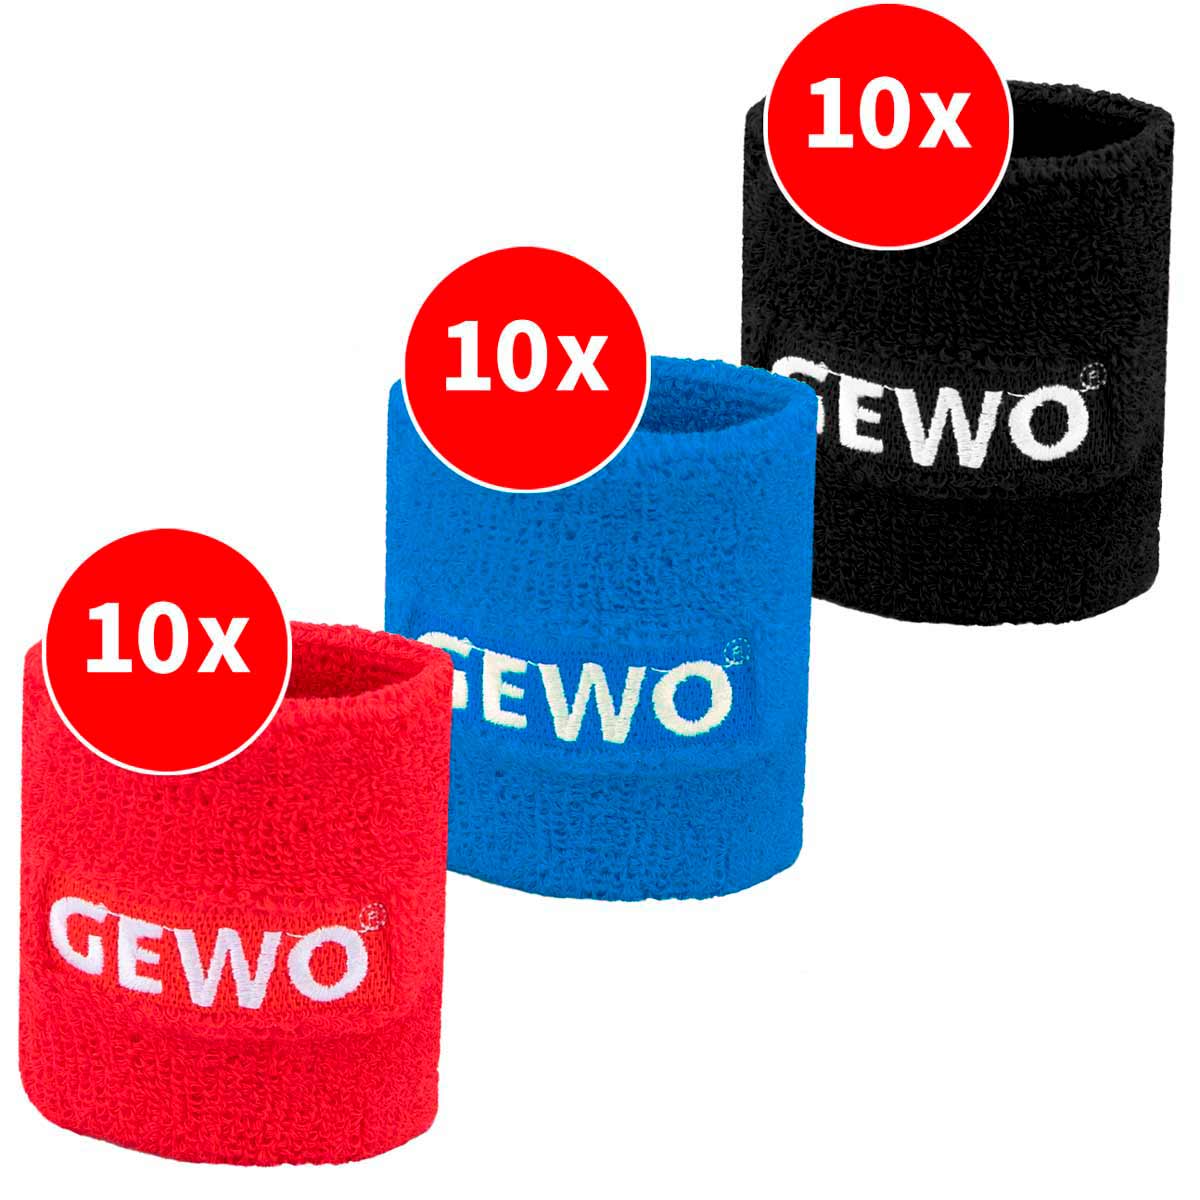 GEWO Set 3x 10 each color wrist band